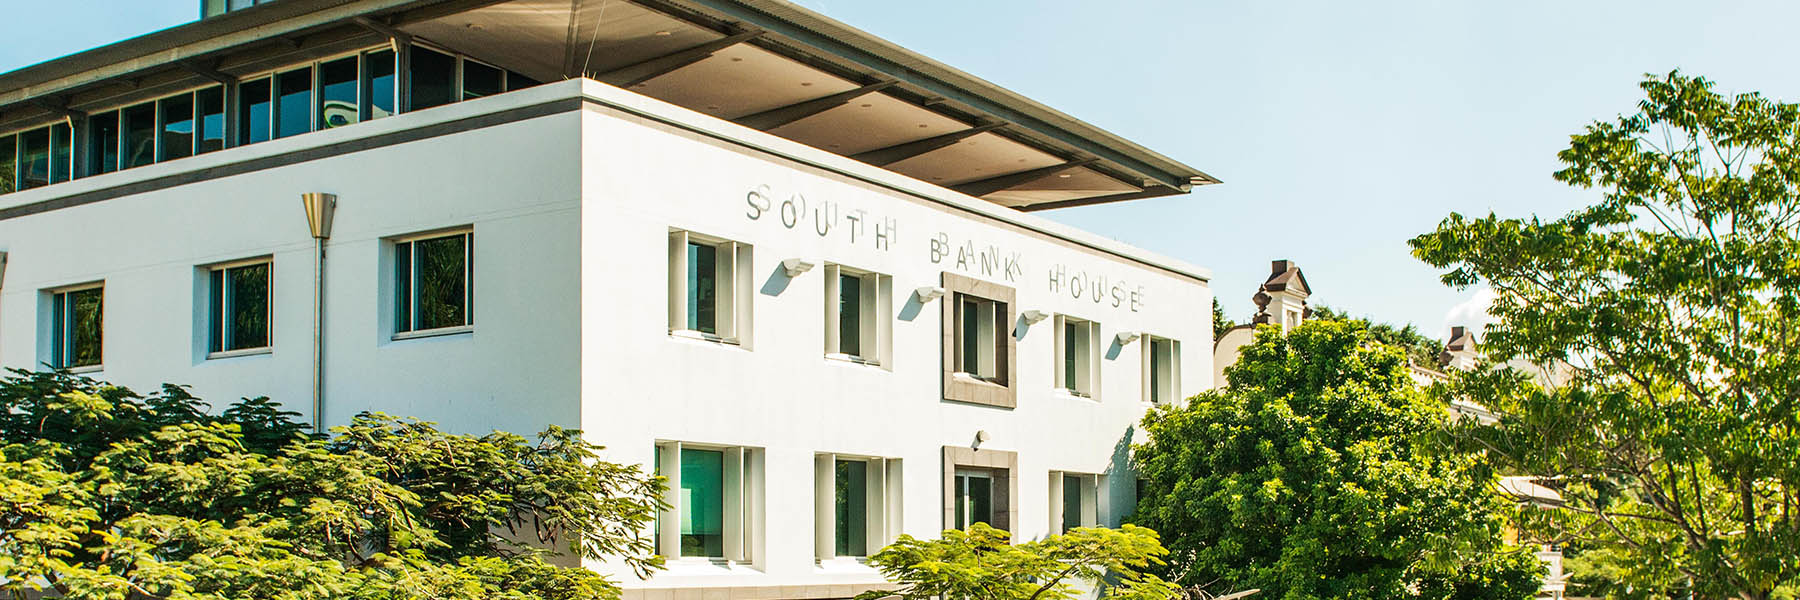 South Bank House